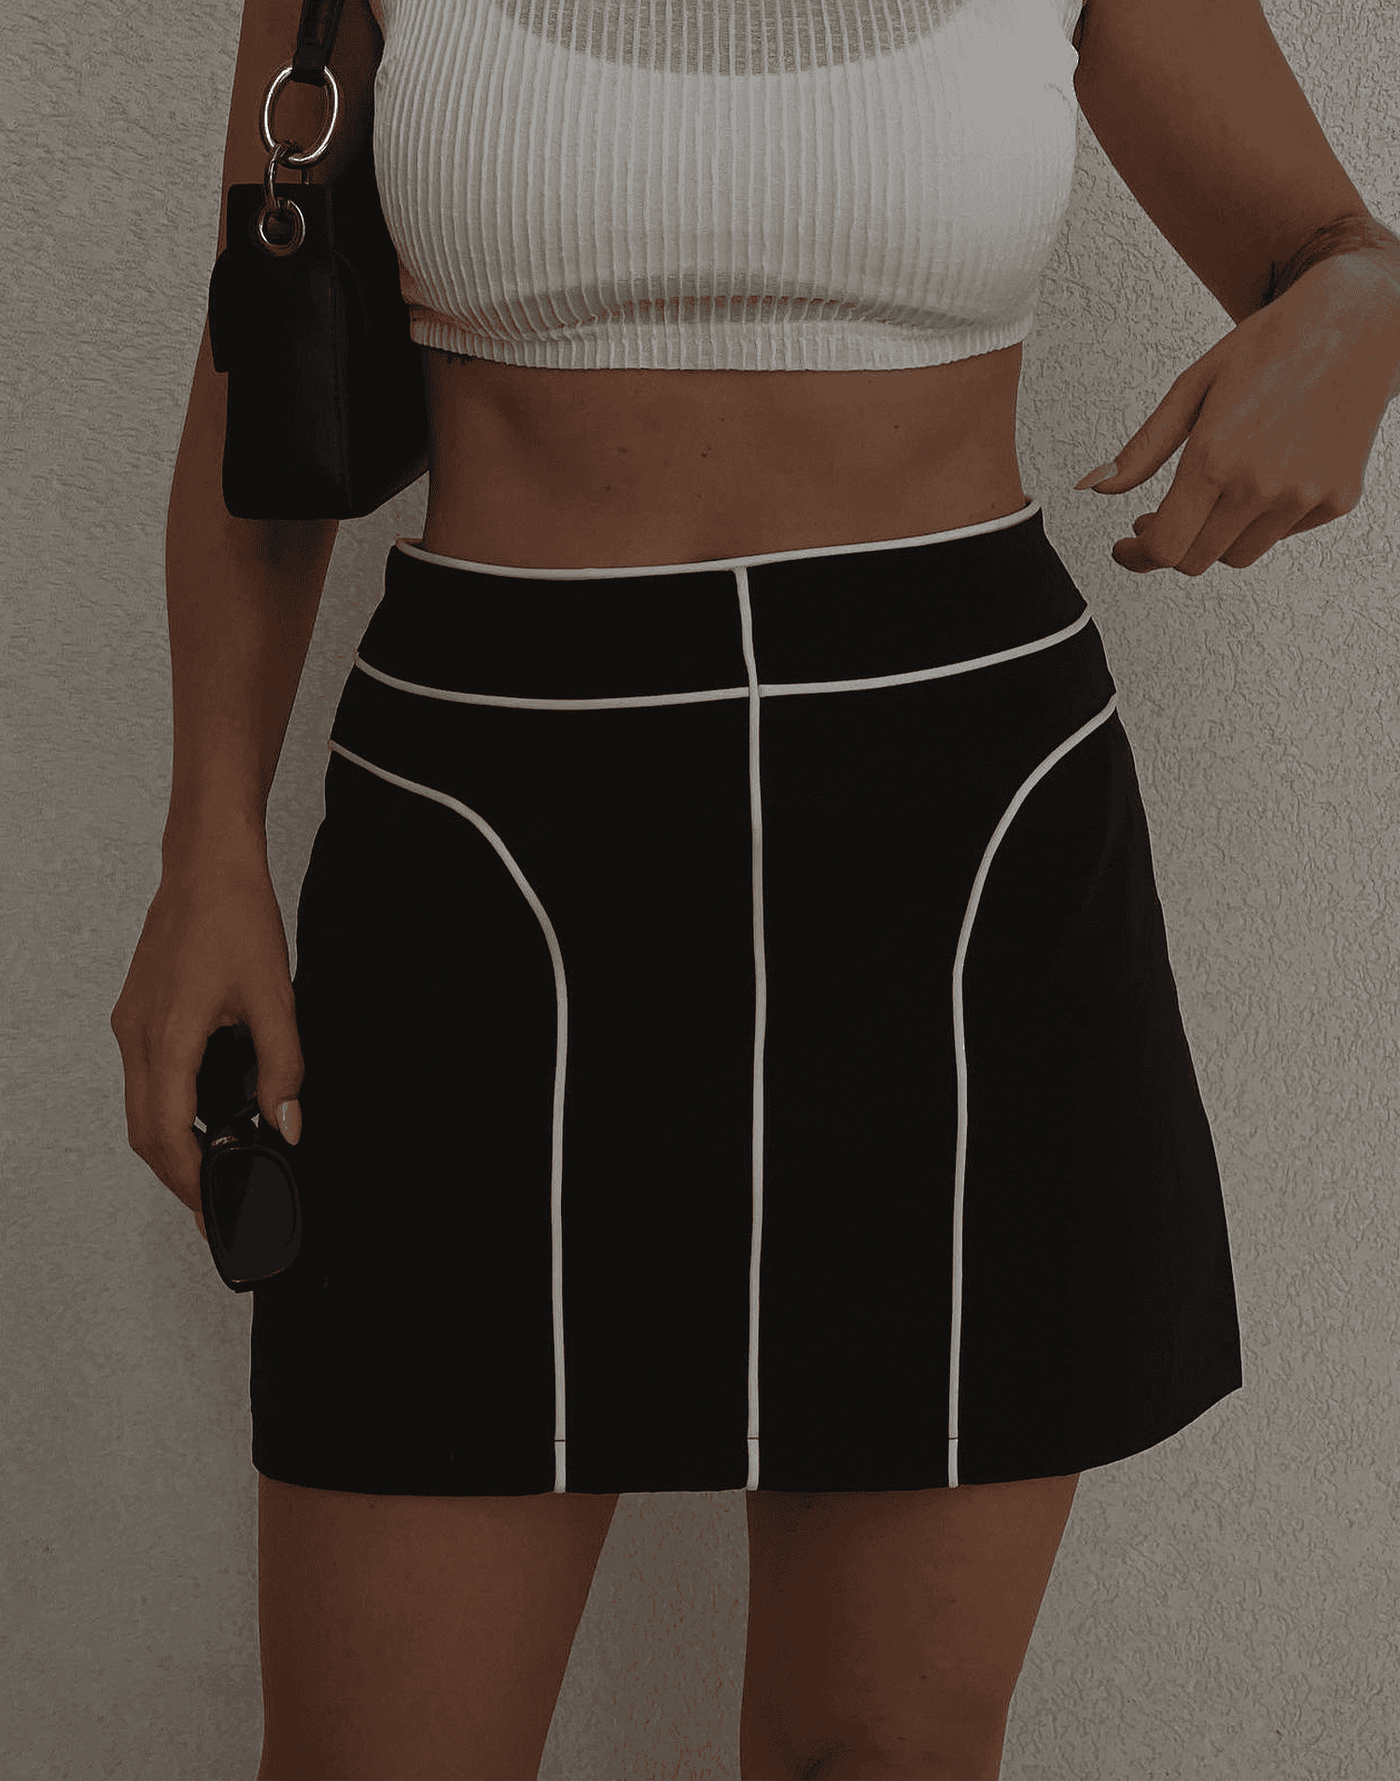 Electric Mini Skirt (Black) - White Contrast Stitching Mini Skirt - Women's Skirt - Charcoal Clothing